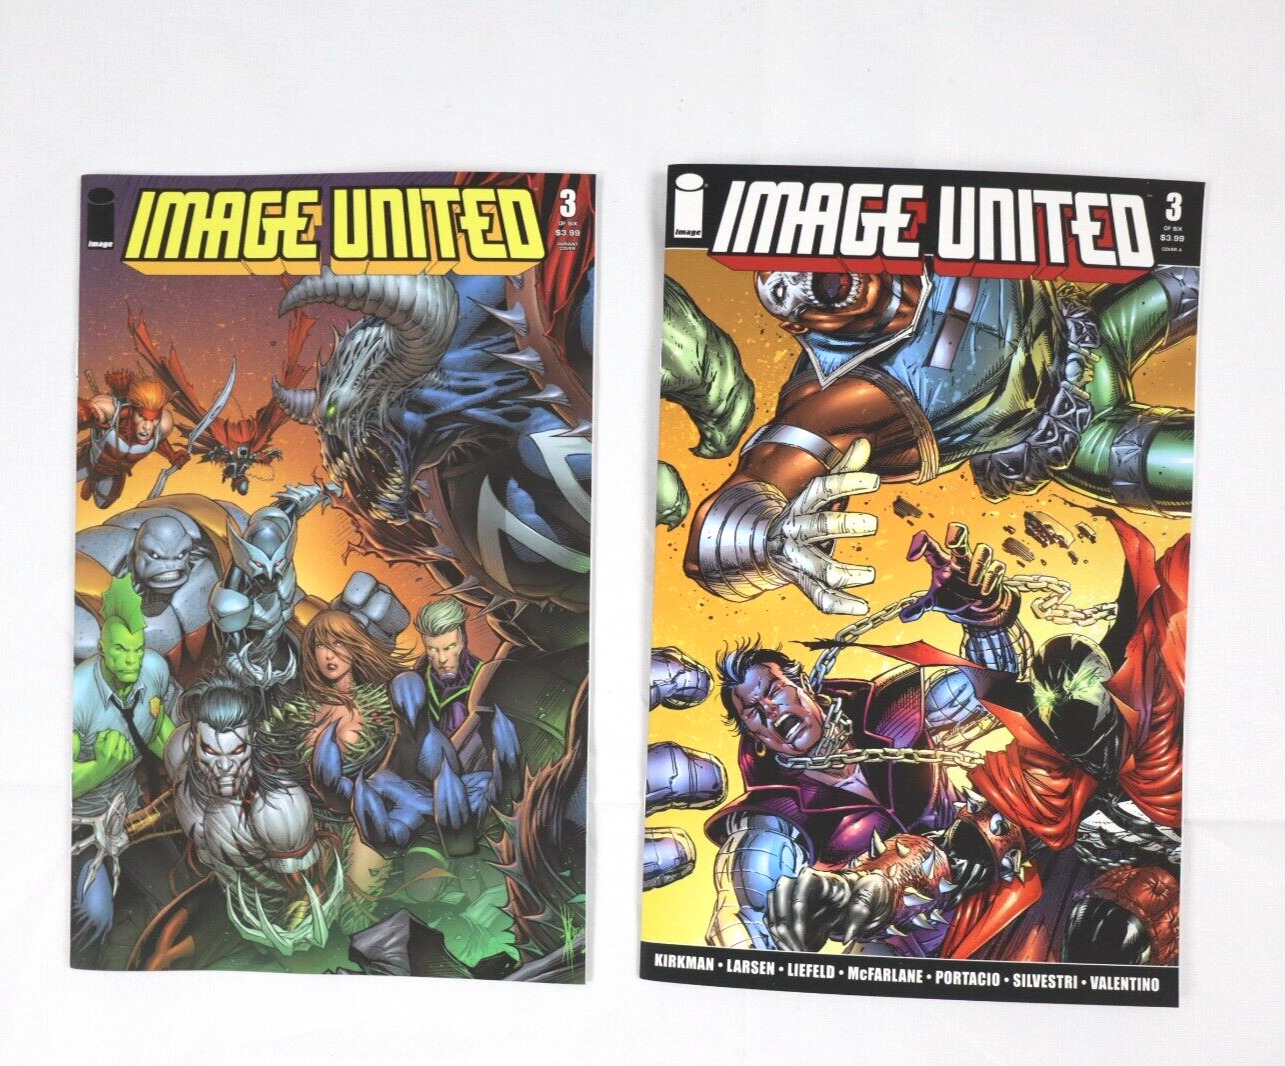 RARE Image United #3 Dale Keown Variant Cover Kirkman/McFarlane +Free Comic 3A